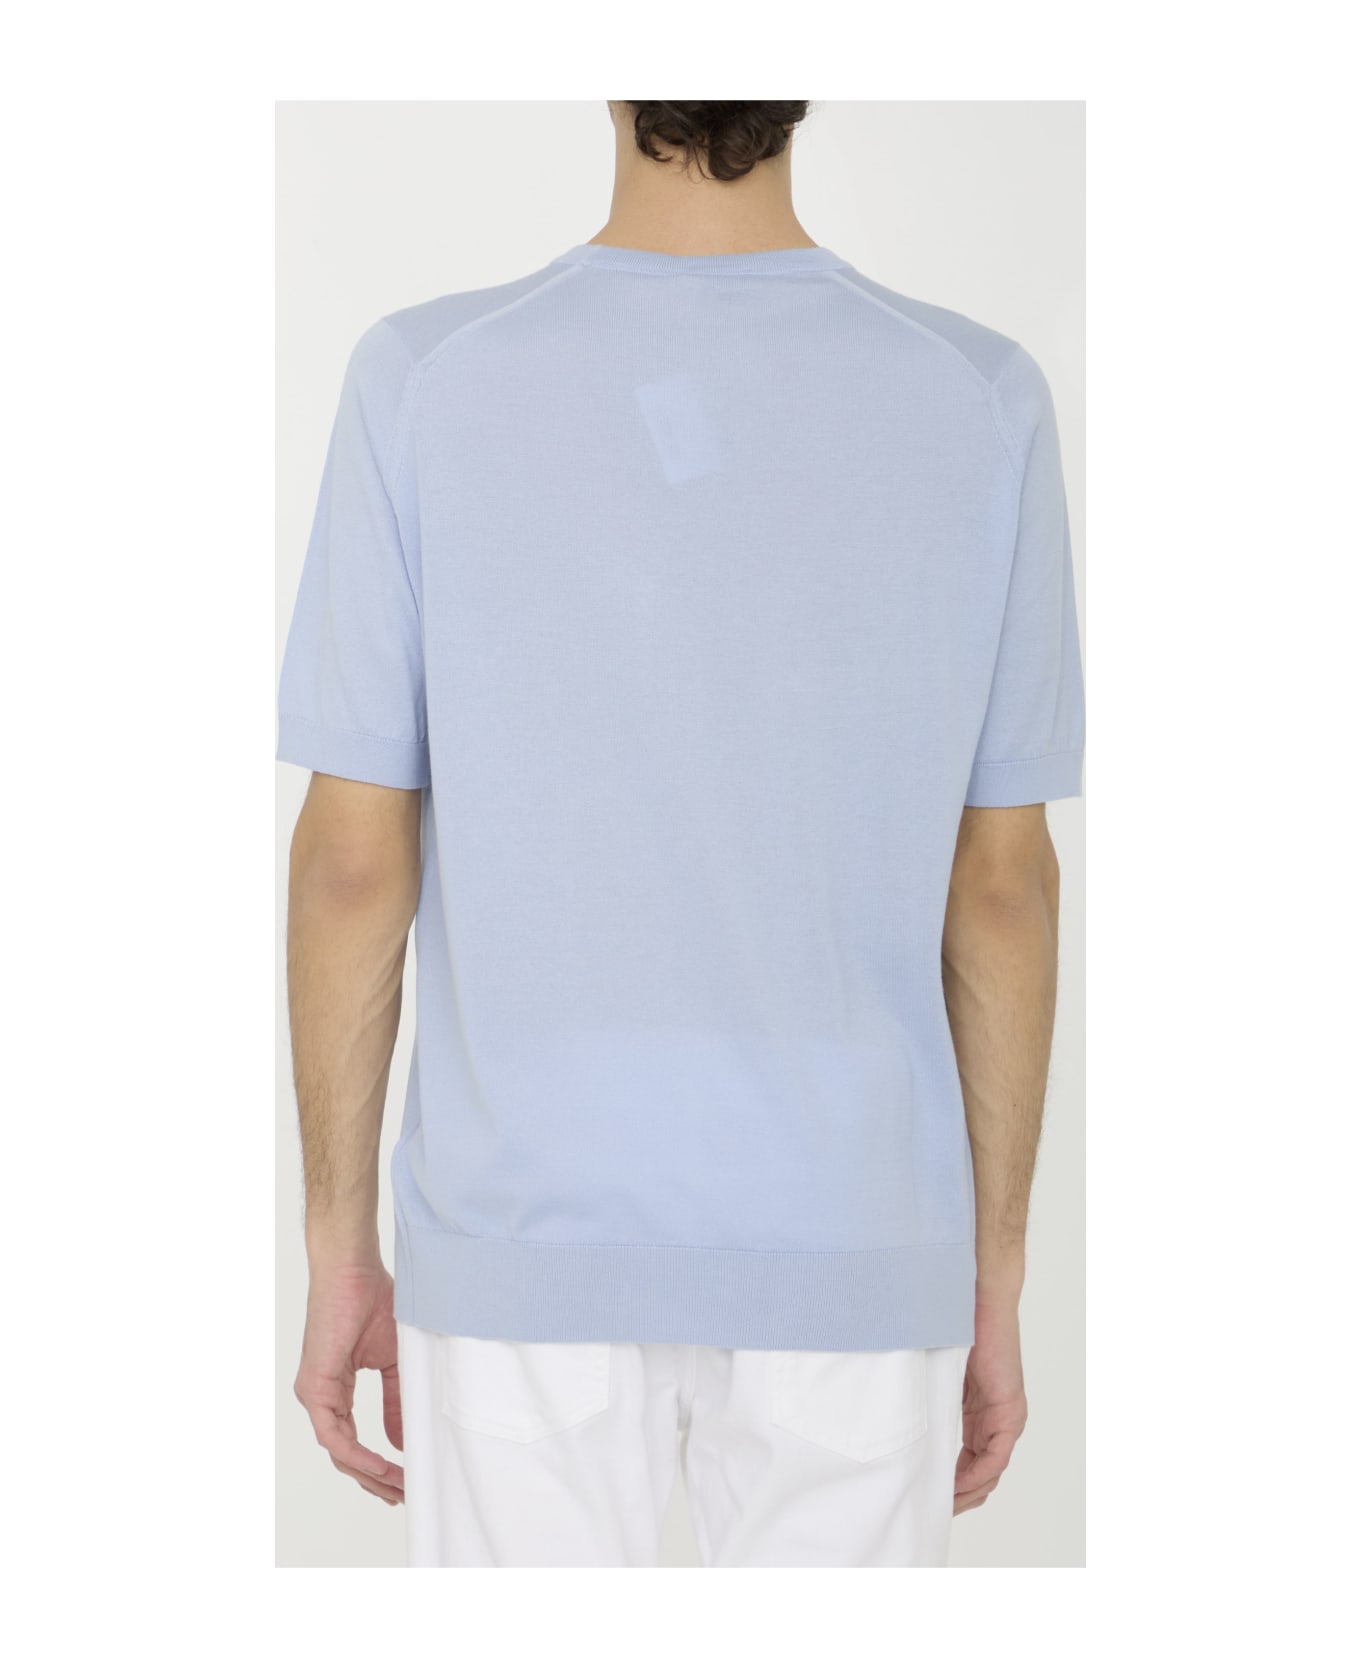 John Smedley Kempton T-shirt - LIGHT BLUE シャツ